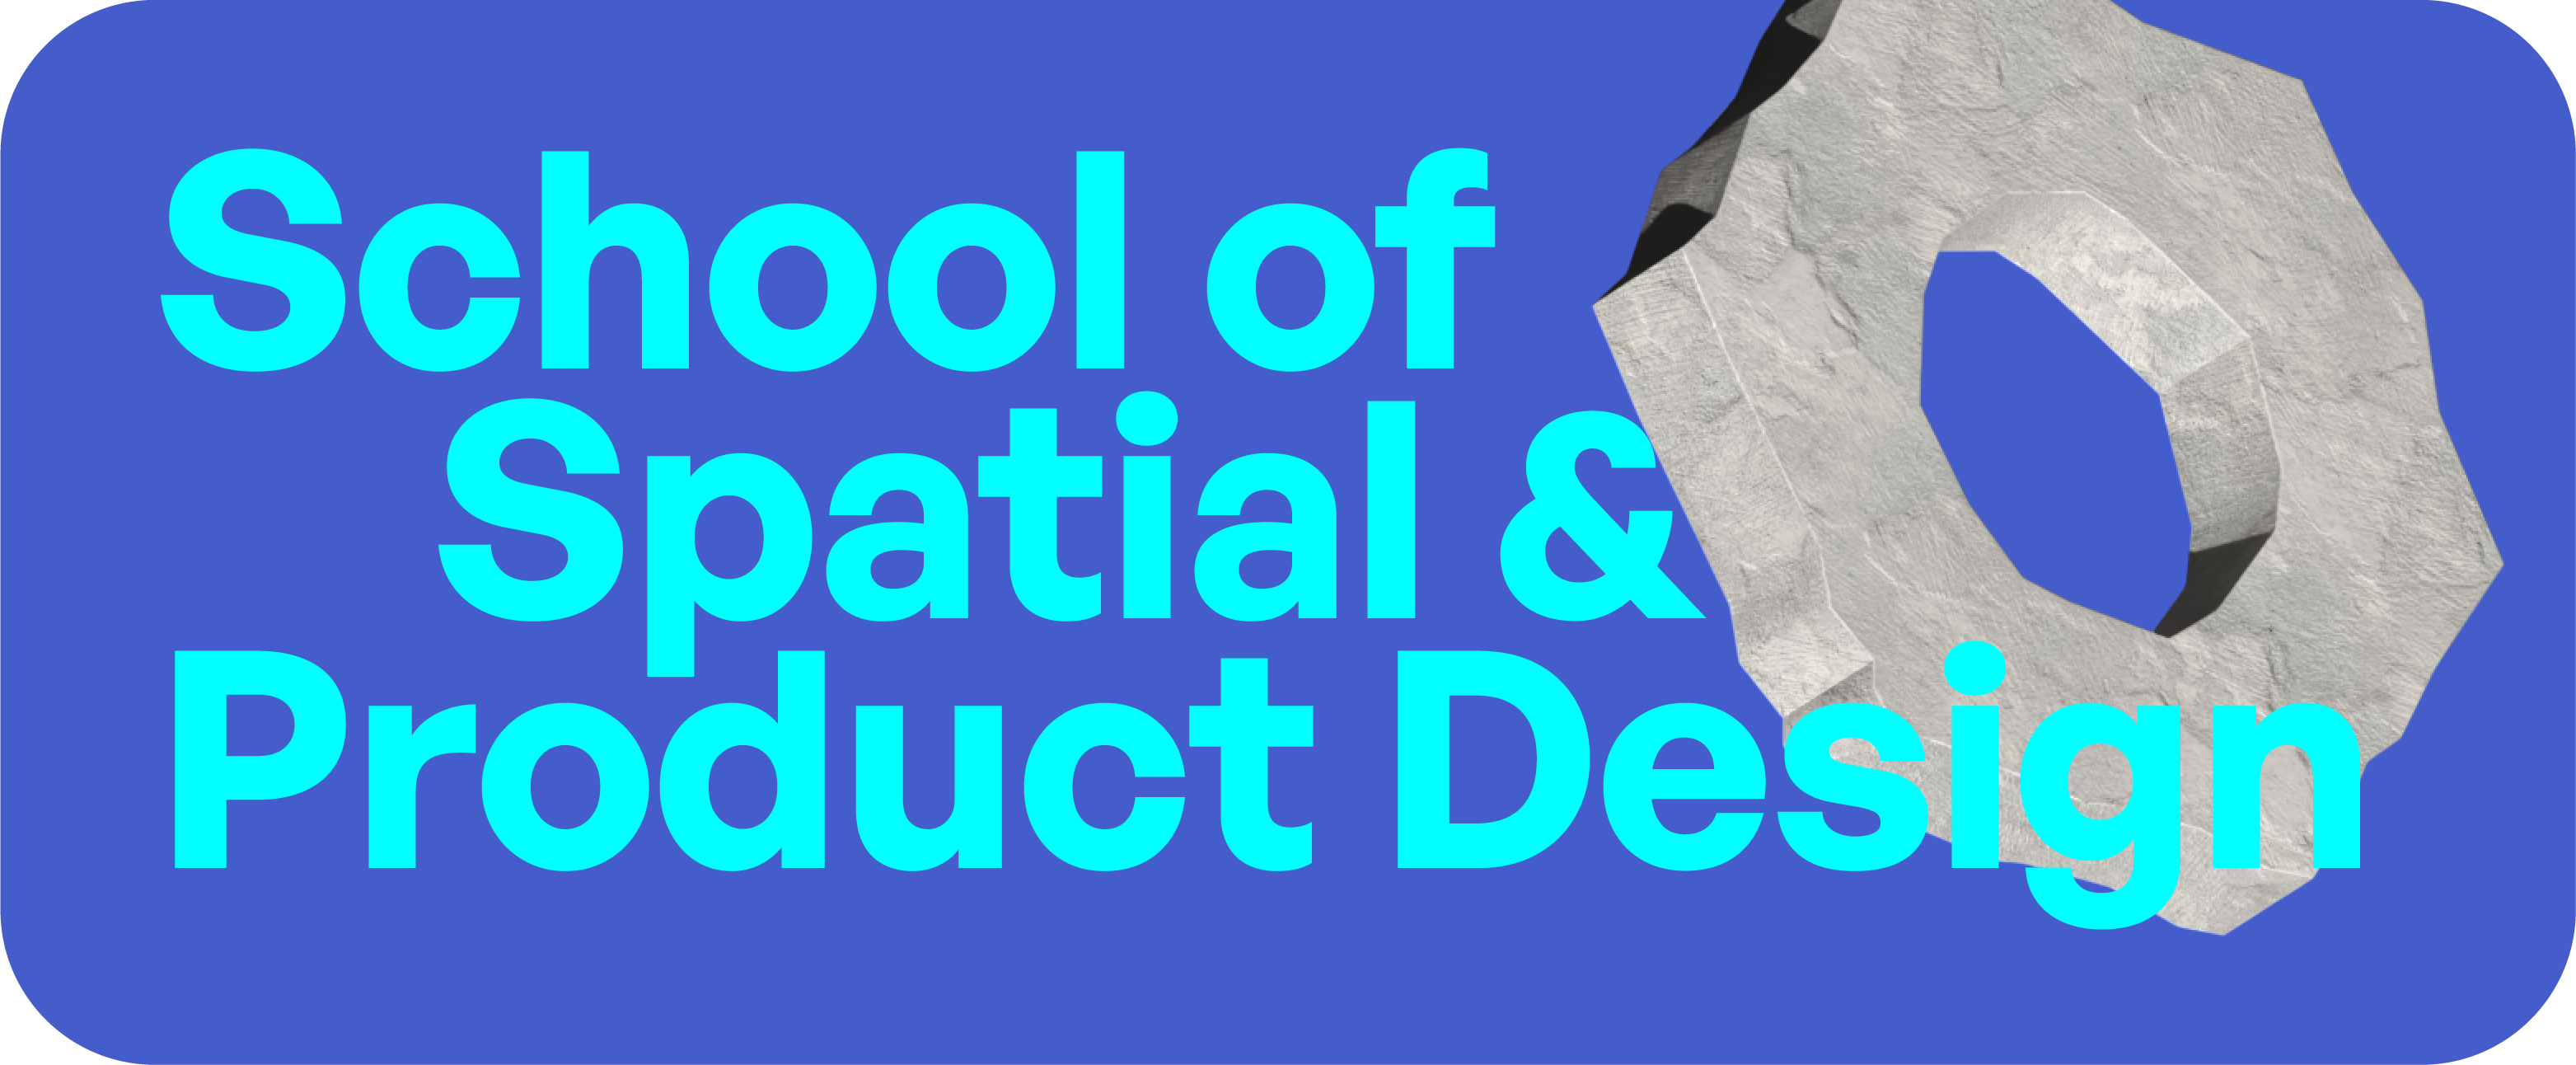 School of Spatial & Product Design